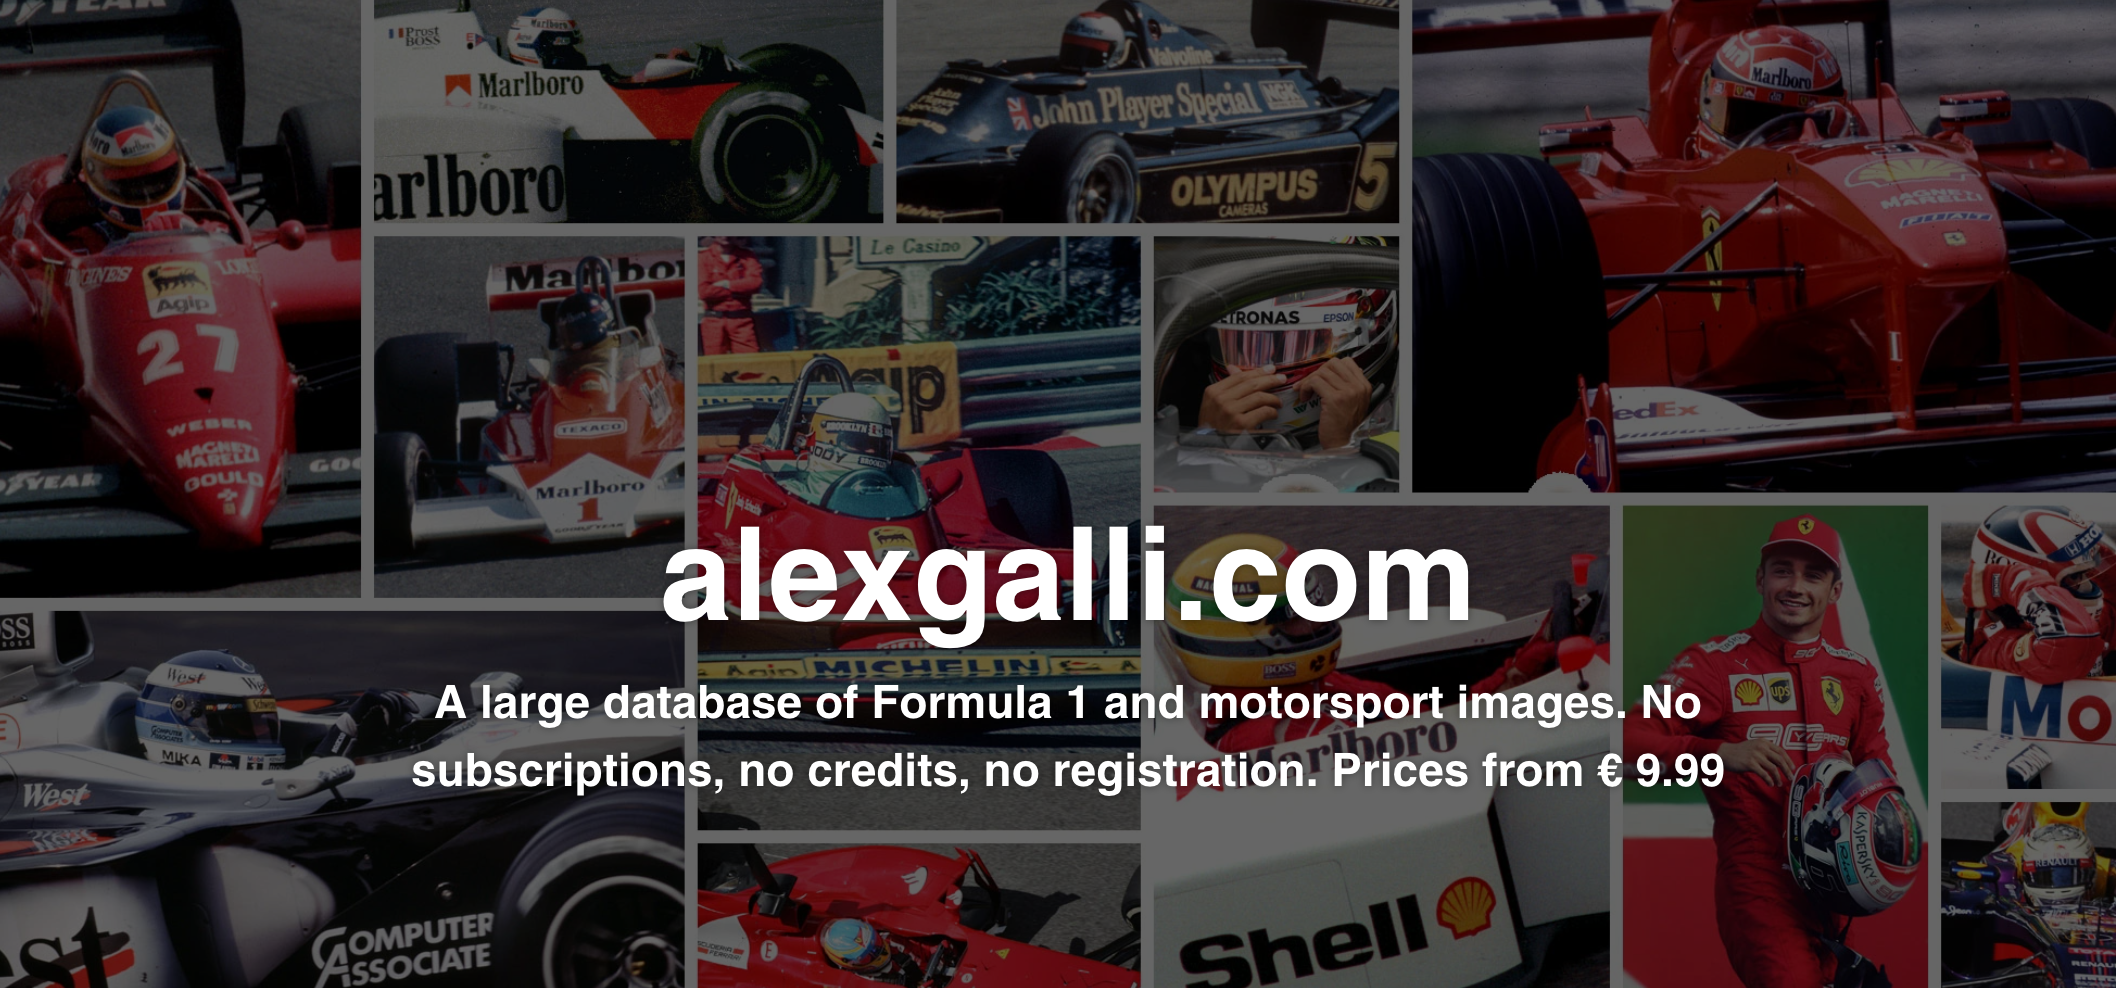 alexgalli.com - F1 & Motorsport Stock Photos and More